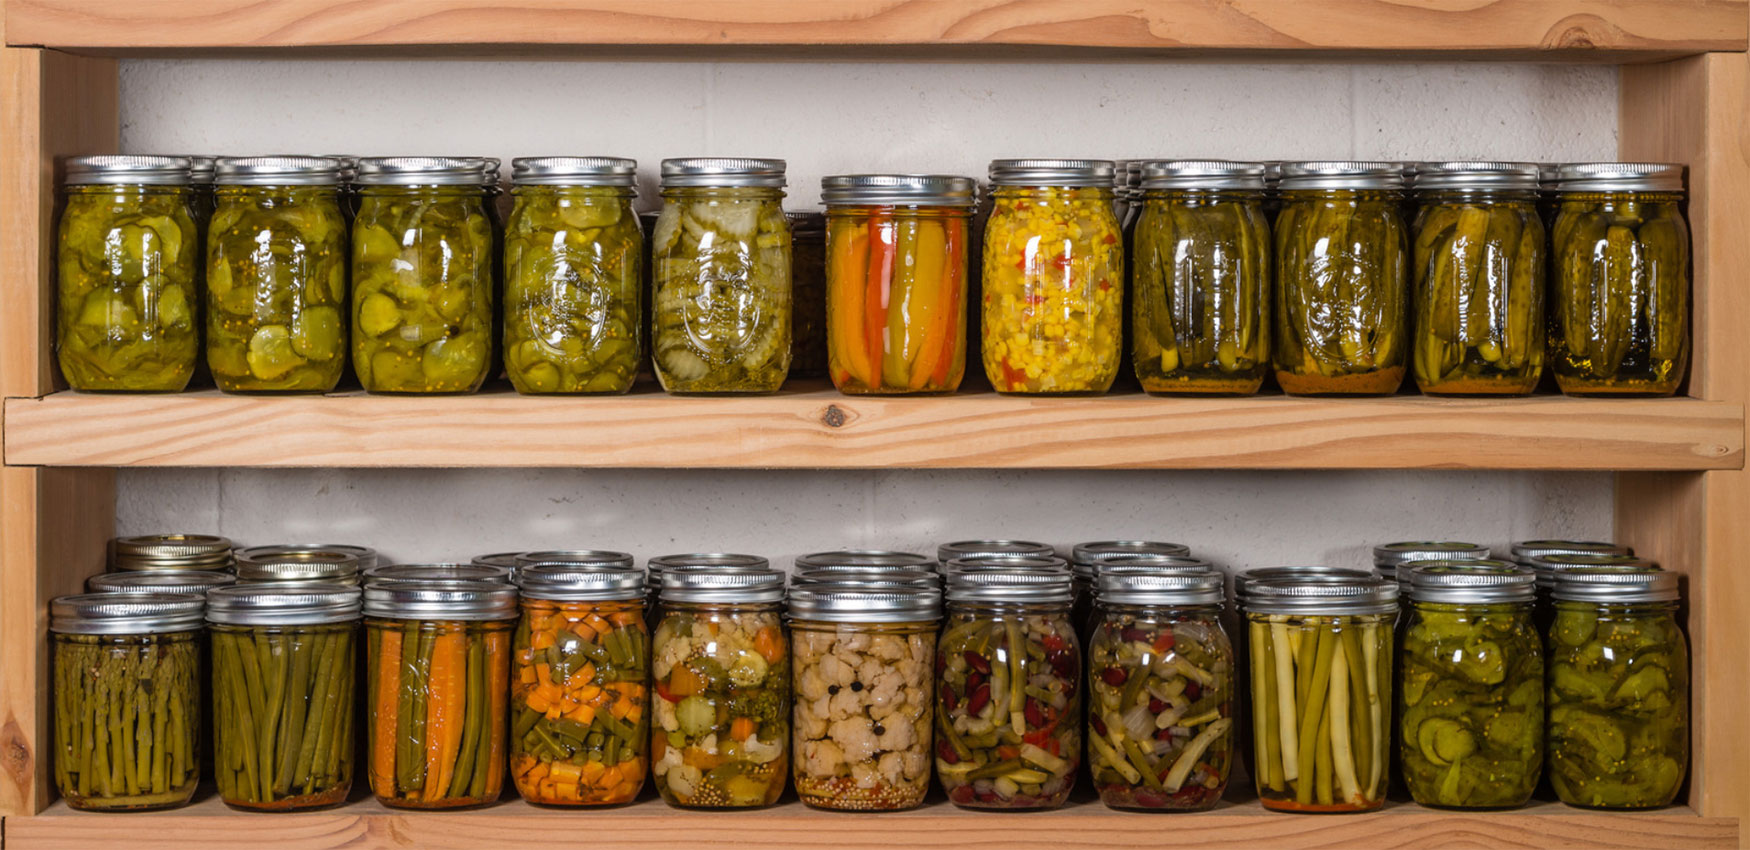 Several jars of home-canned vegetables arranged on a shelf.